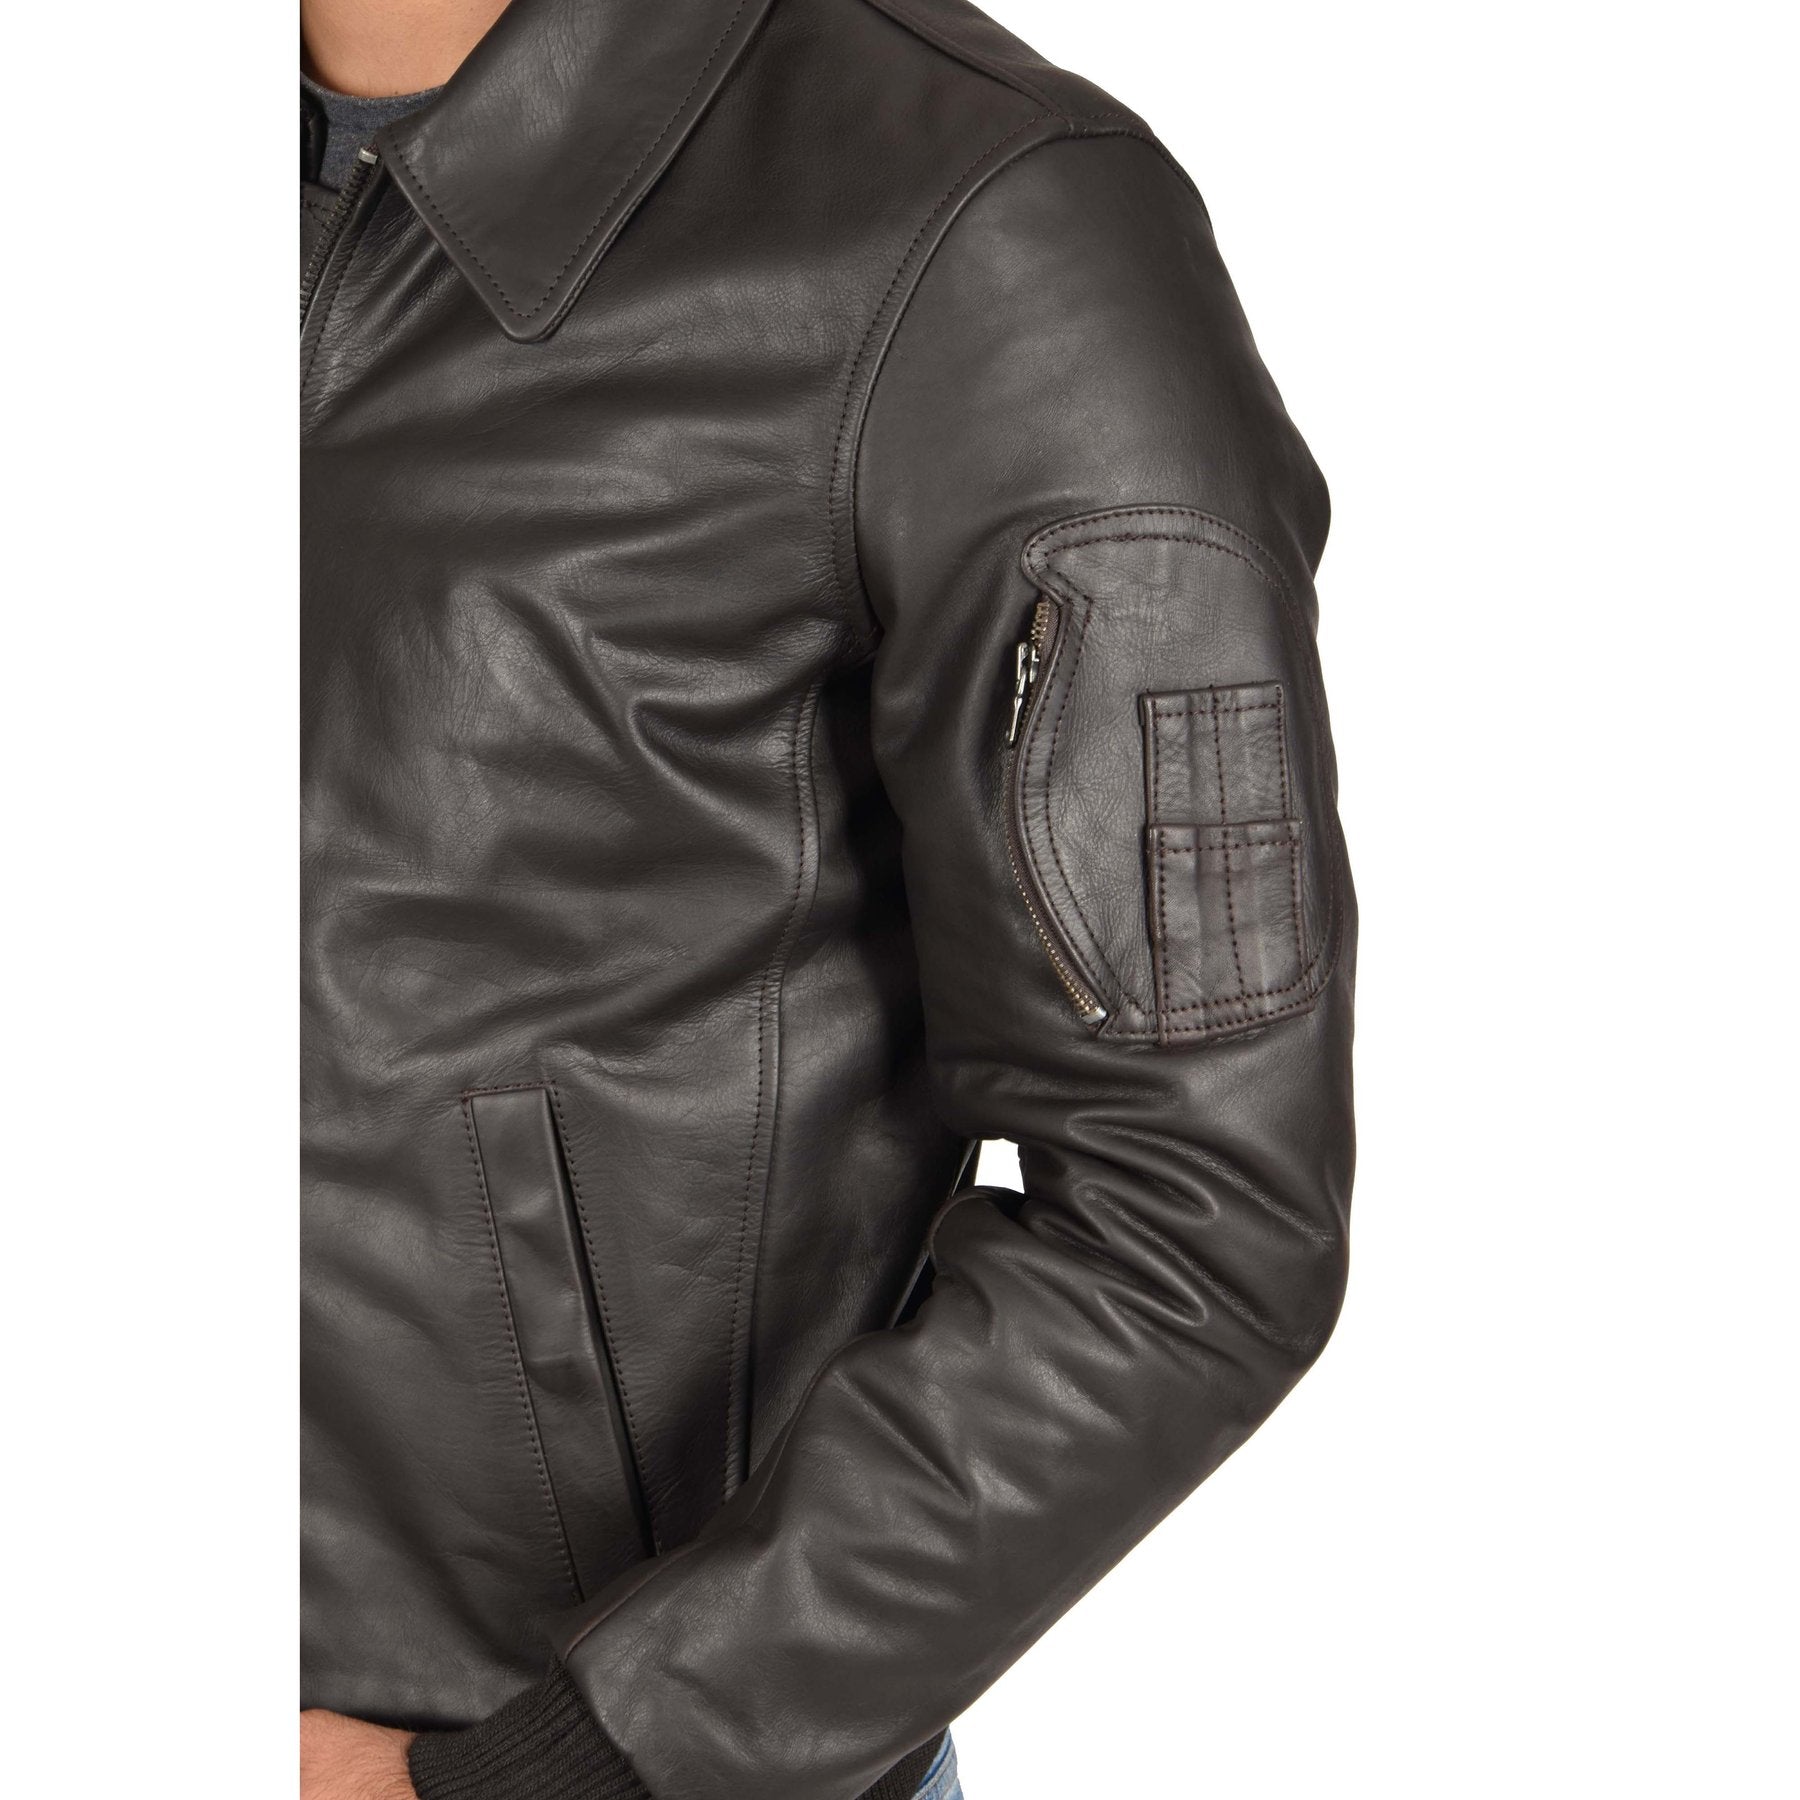 Spine Spark Men's Brown Bomber Pilot Style Leather Jacket